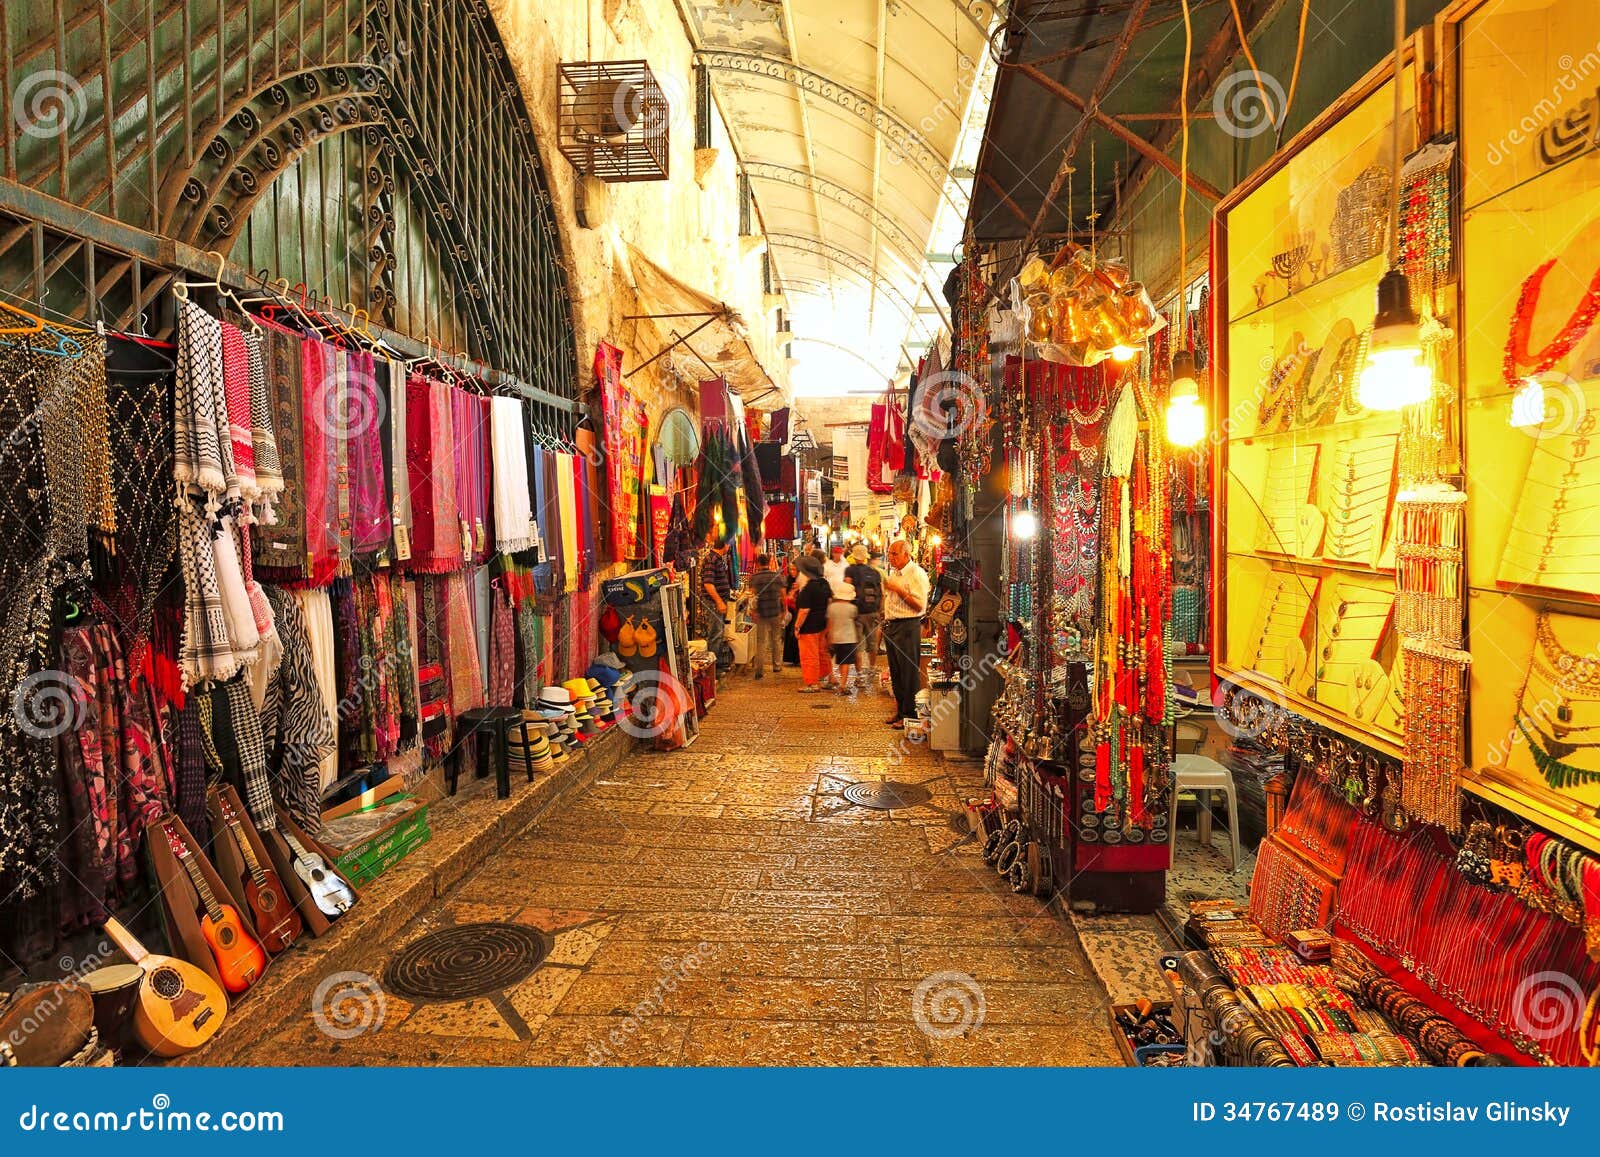 Old Market In Jerusalem. Editorial Stock Image - Image: 34767489